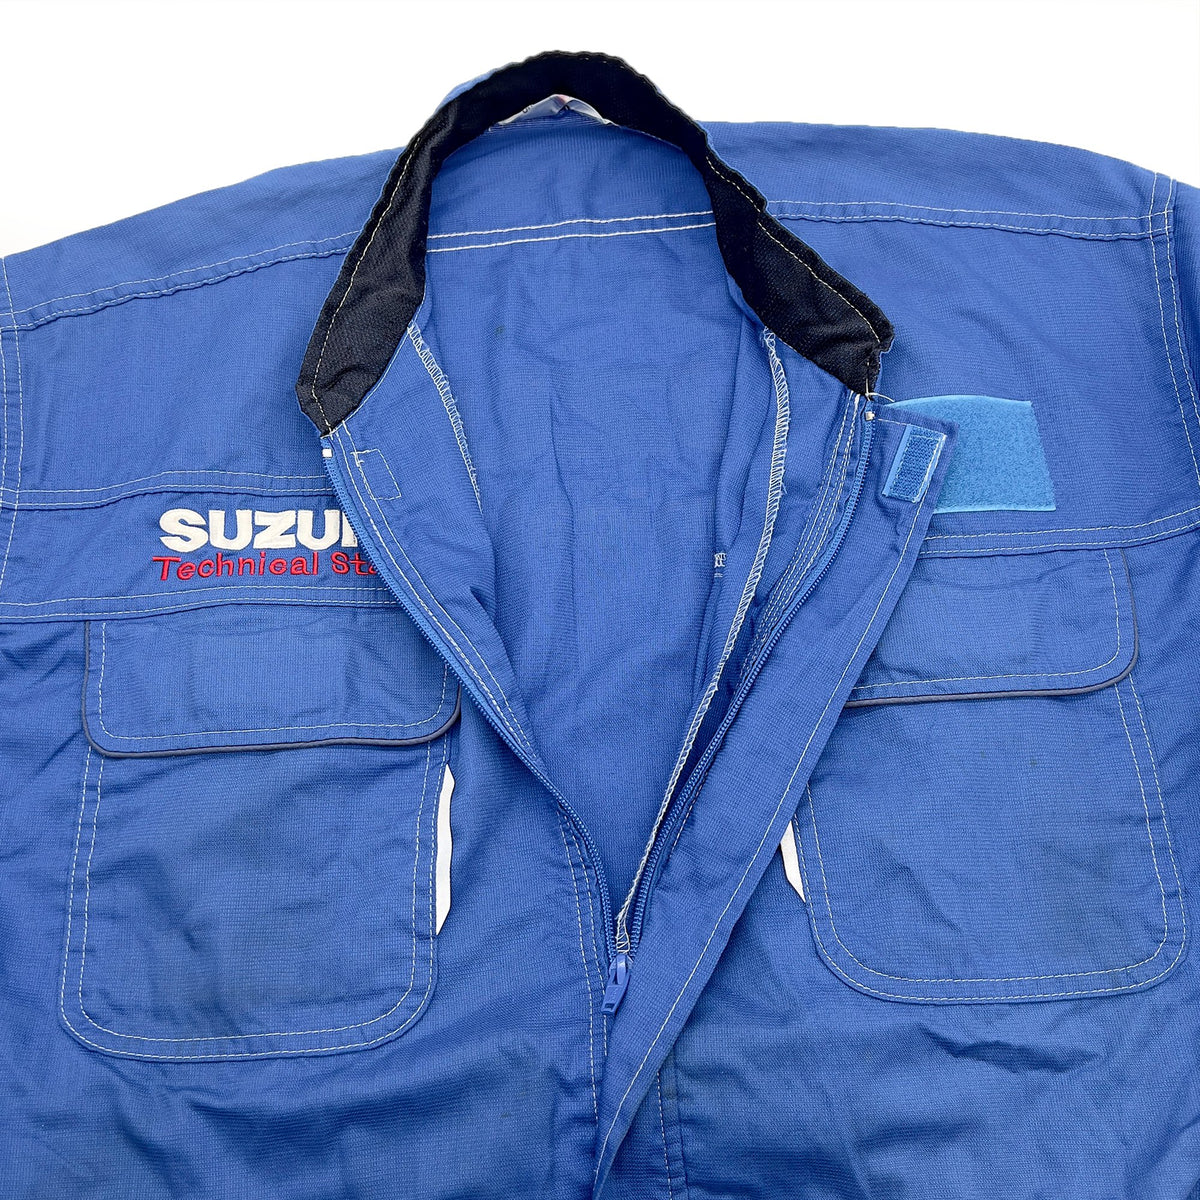 JDM Retro Suzuki Technical Staff All Weather Mechanic Coveralls Tsunagi Blue - Sugoi JDM